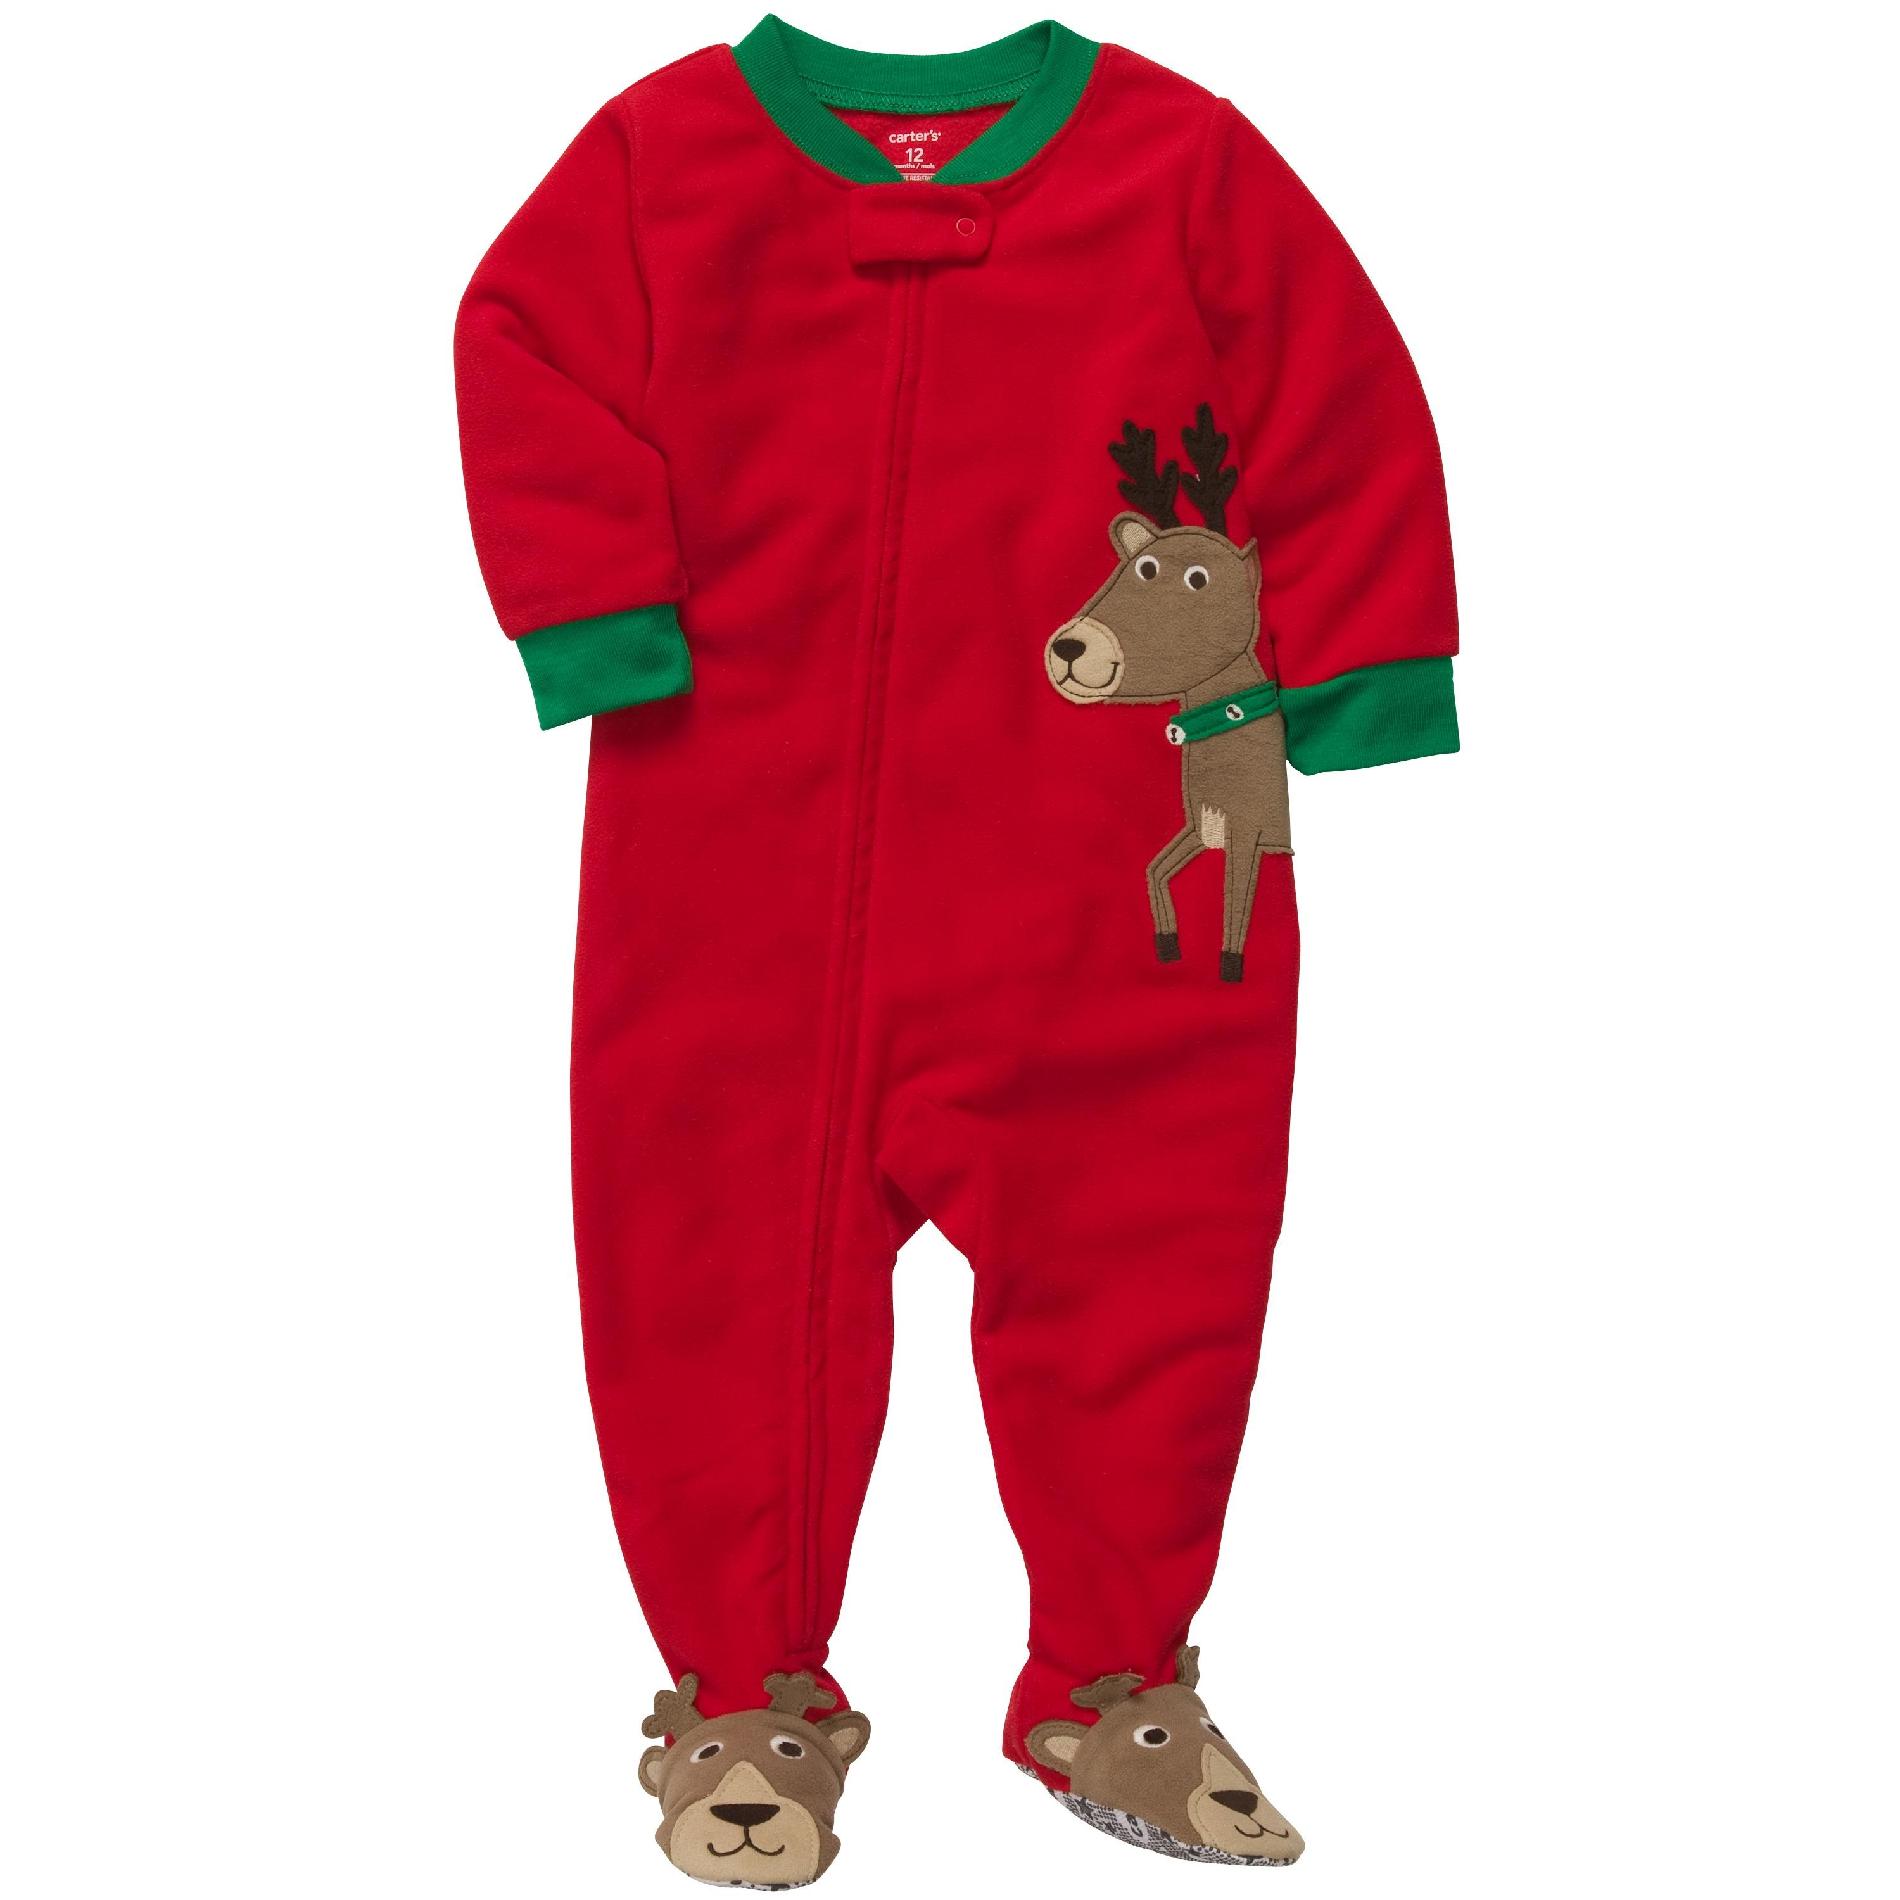 Carter's Infant & Toddler Boy's Christmas Sleeper Pajamas - Holiday Reindeer